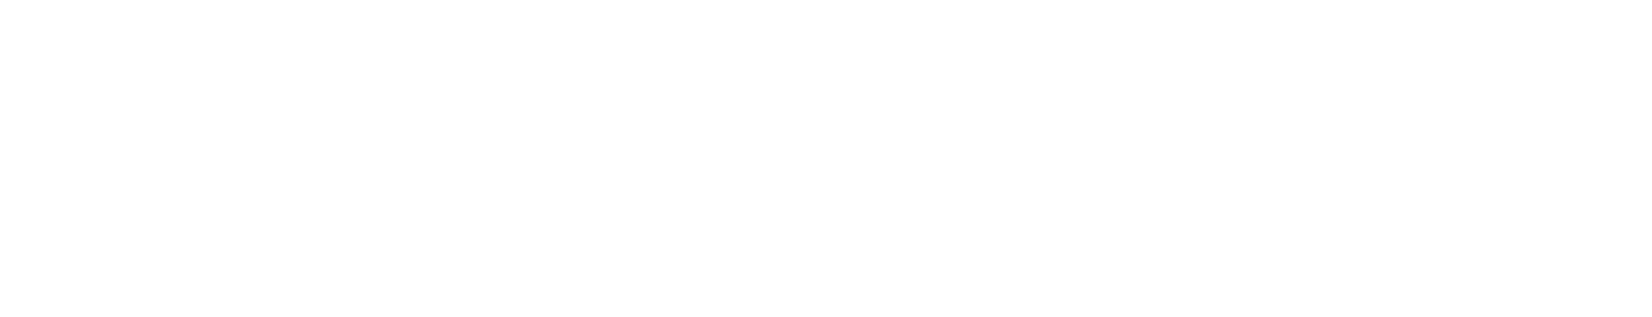 UC Irvine Strategic Communications & Public Affairs wordmark